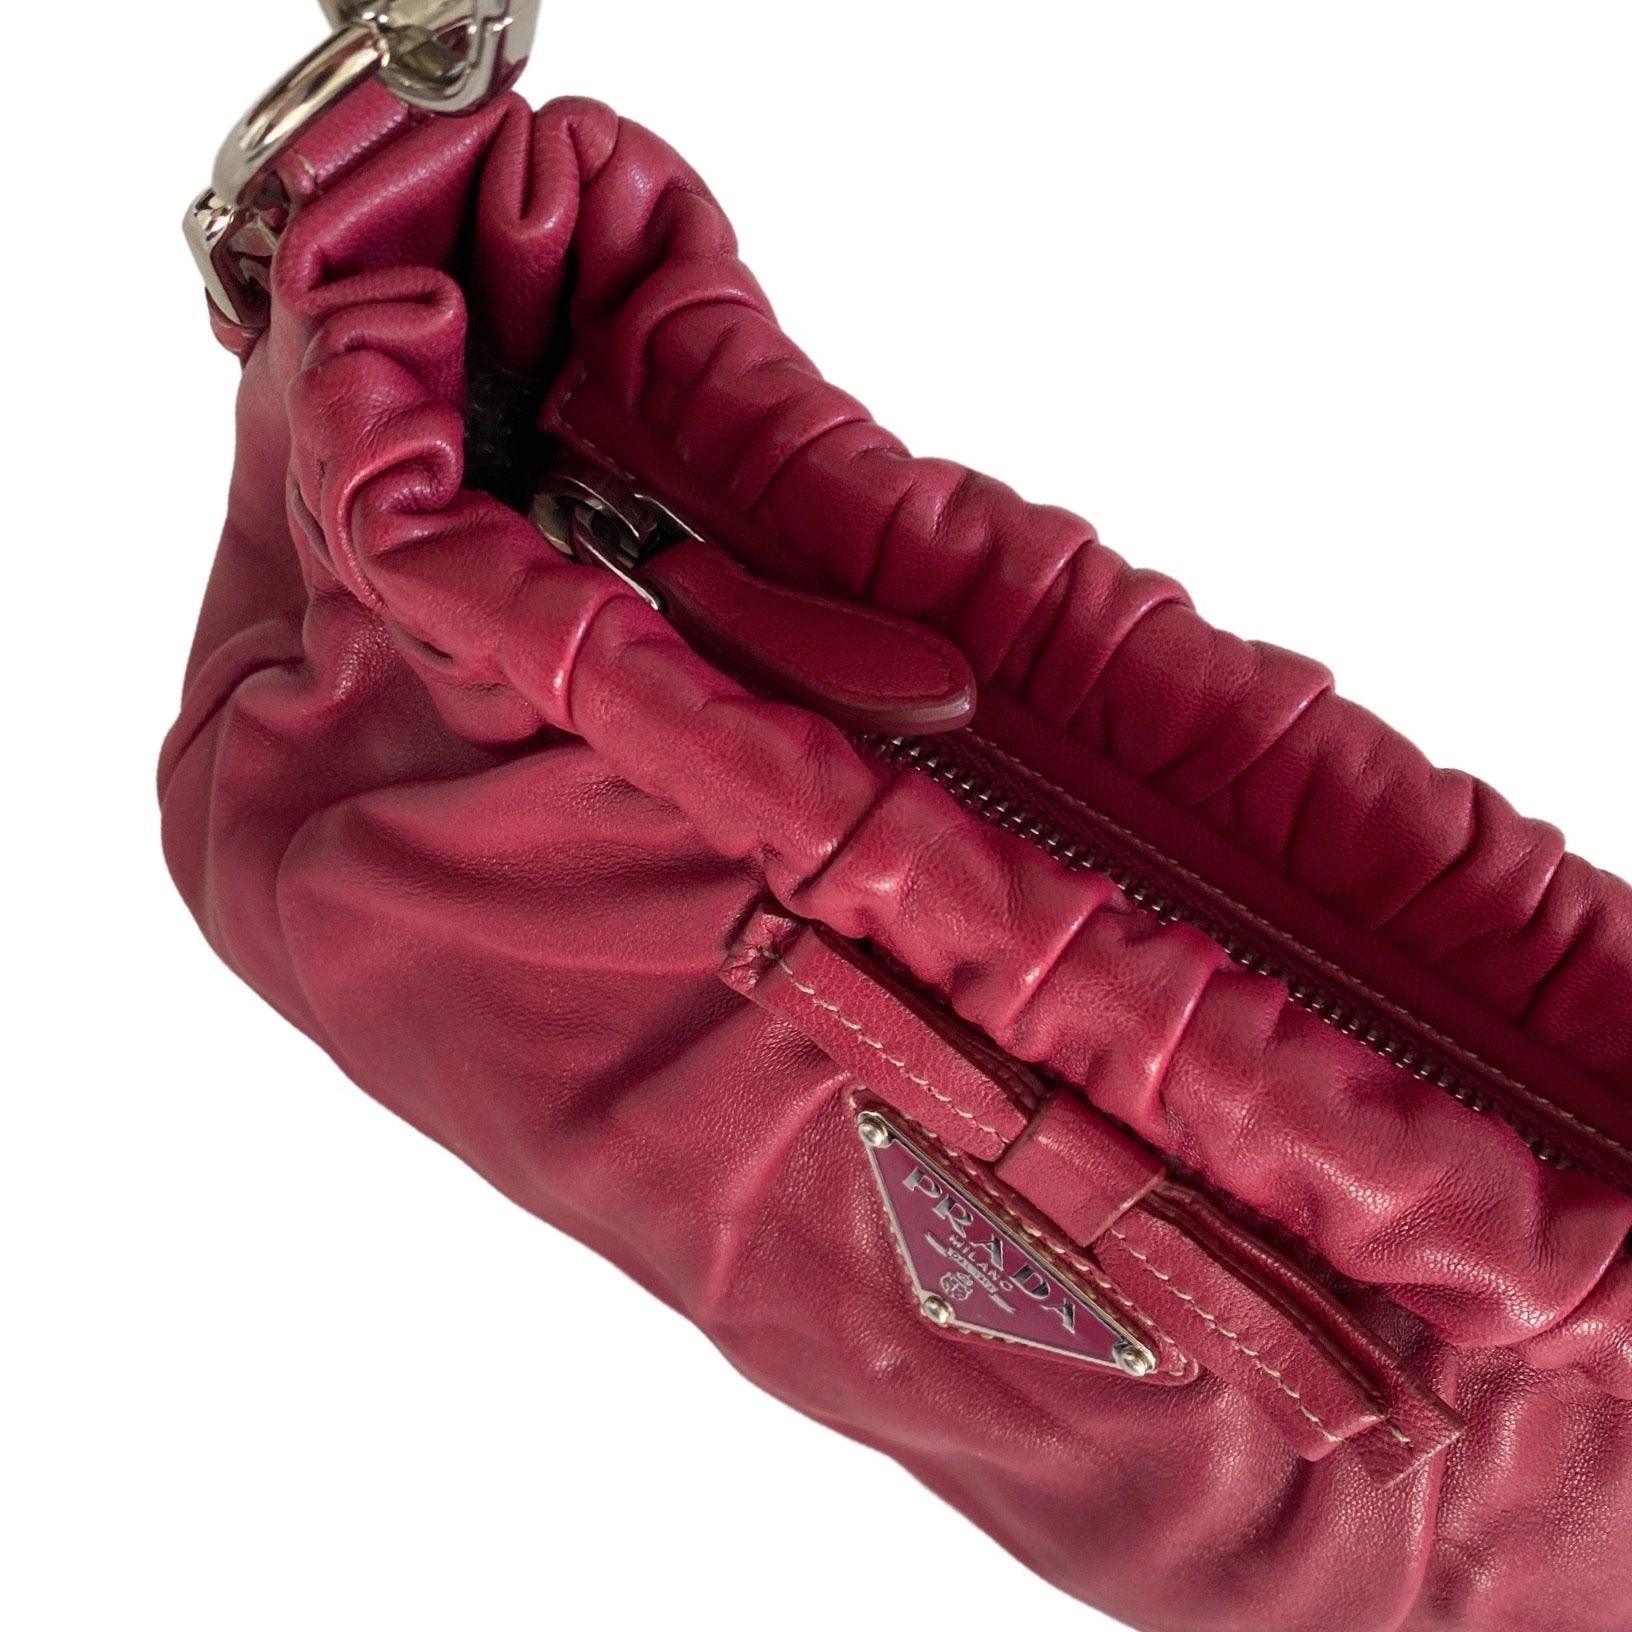 Vintage Prada Pink Leather Mini Bow Shoulder Bag – Treasures of NYC